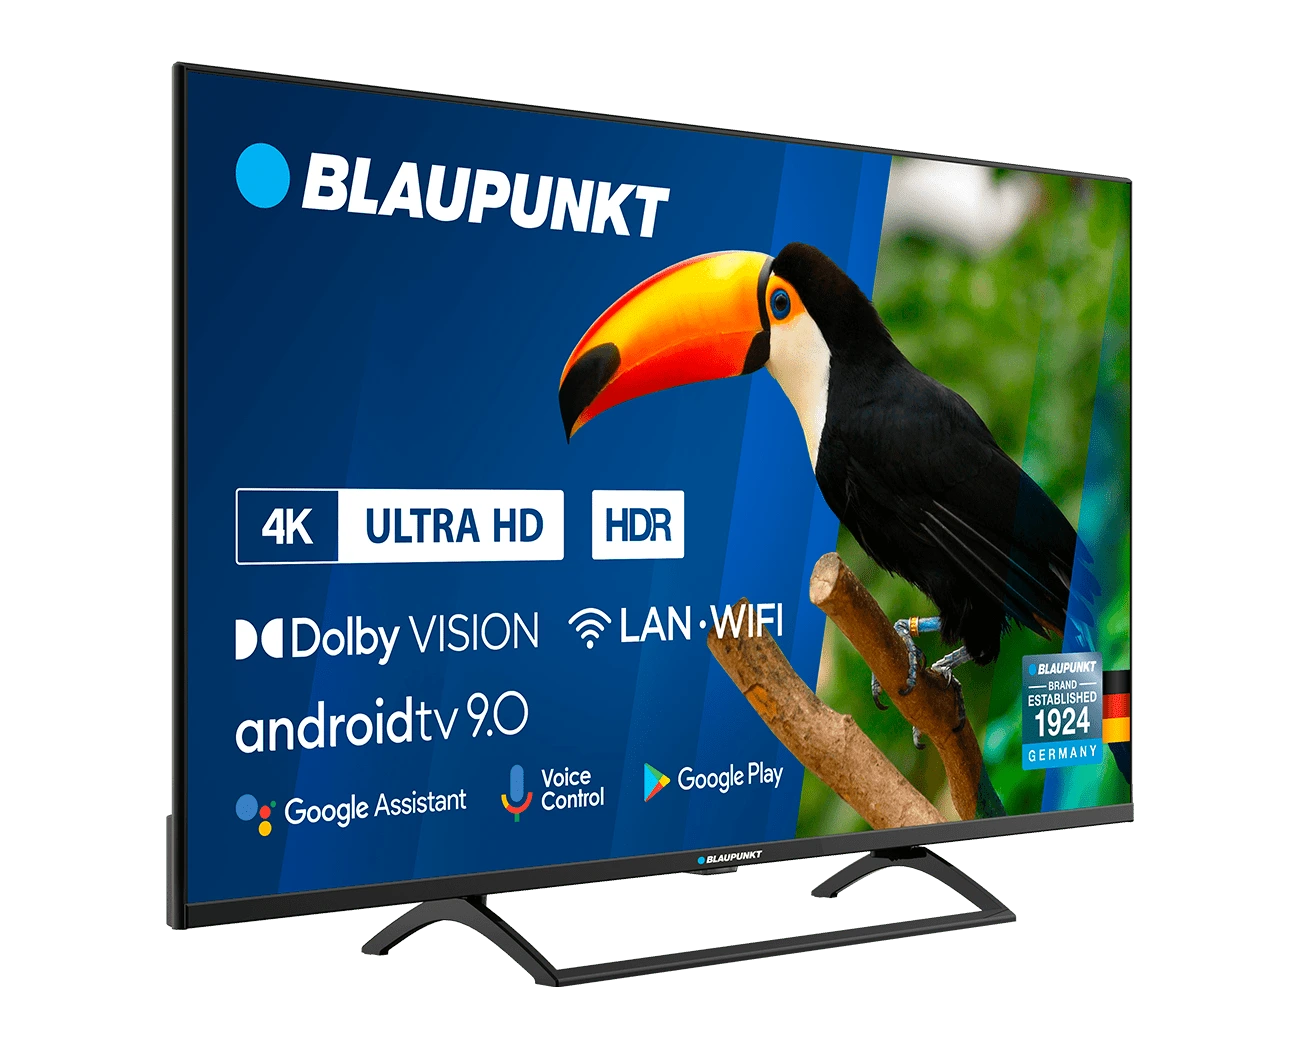 TV UHD 4K Smart TV LED Blaupunkt 43UB7000